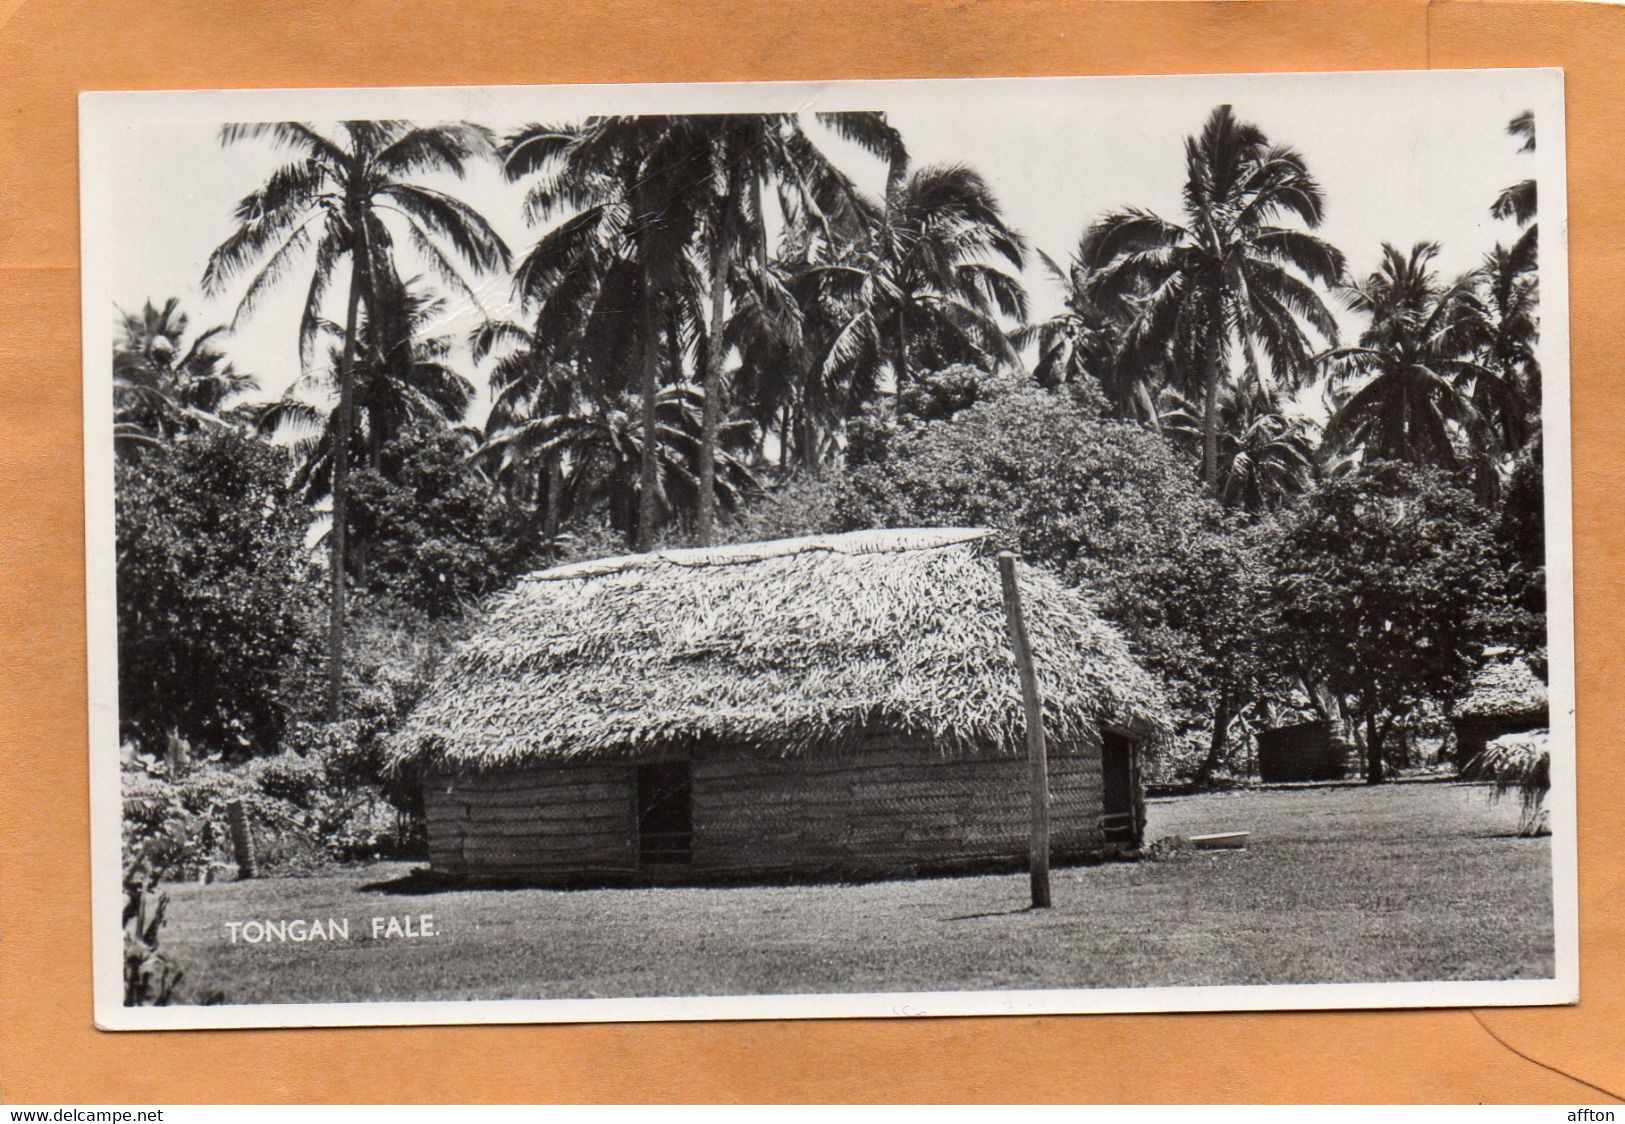 Tonga Old Postcard - Tonga